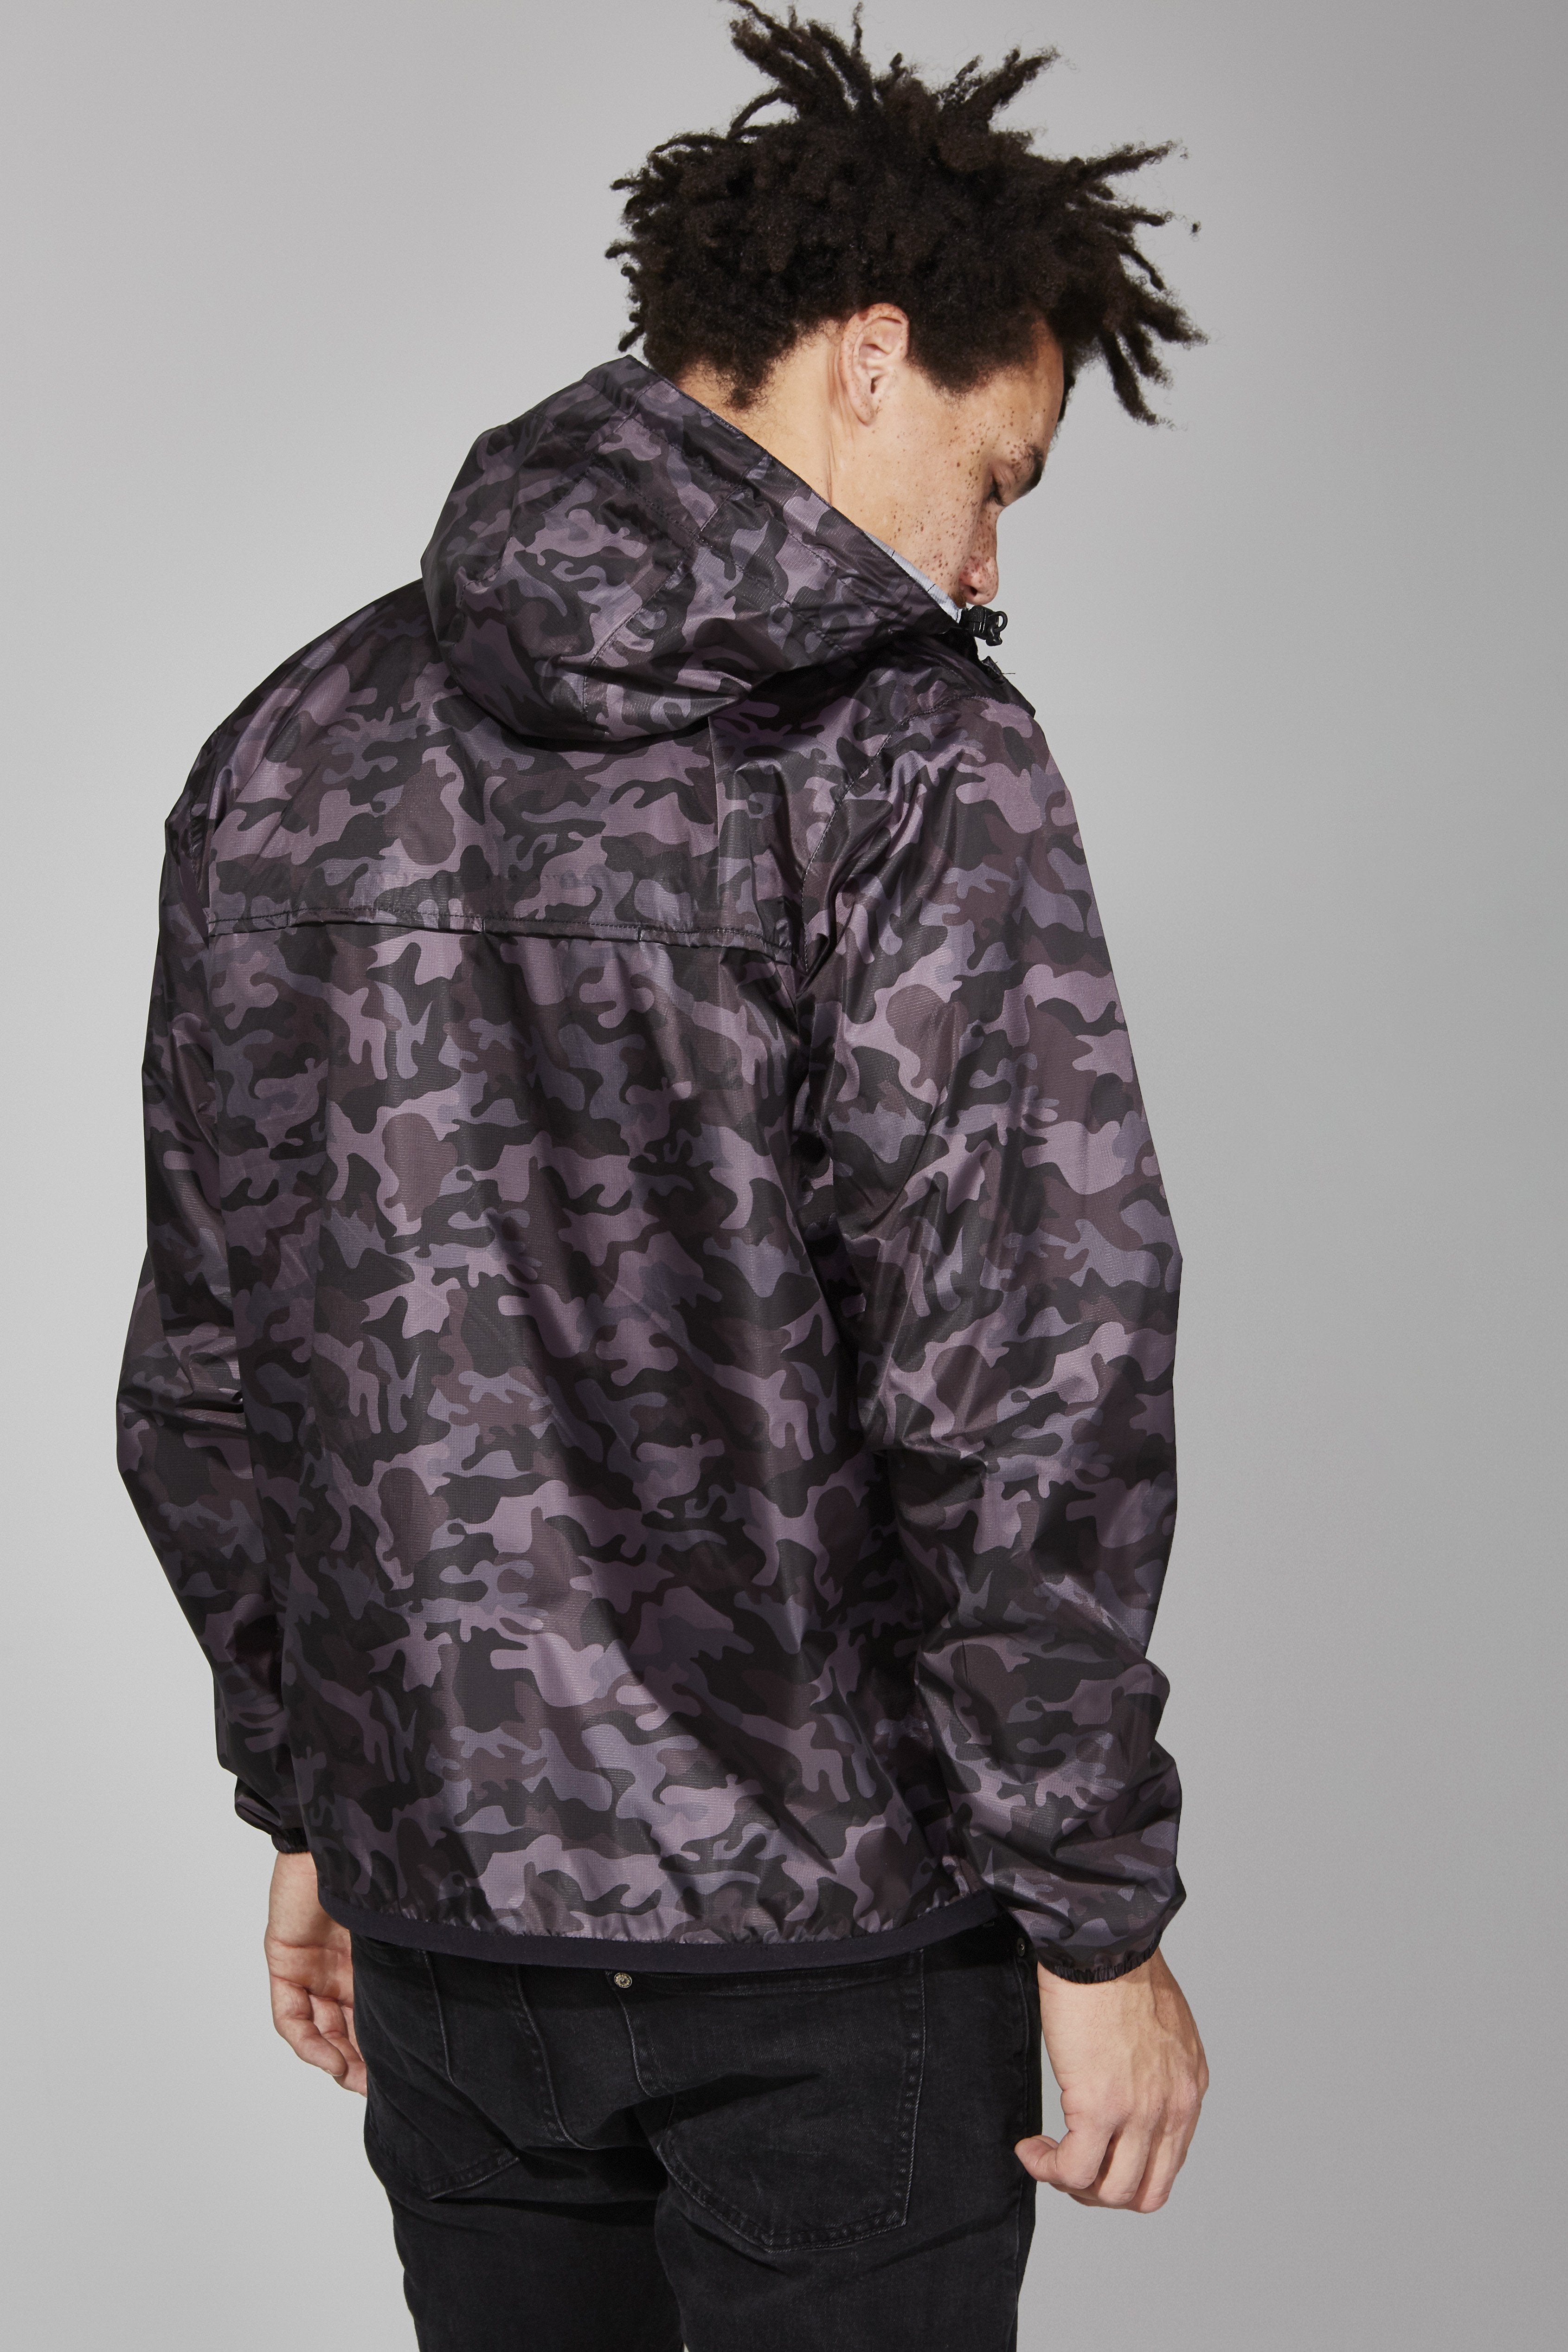 Max Print - Black Camo Full Zip Packable Rain Jacket - O8lifestyle.